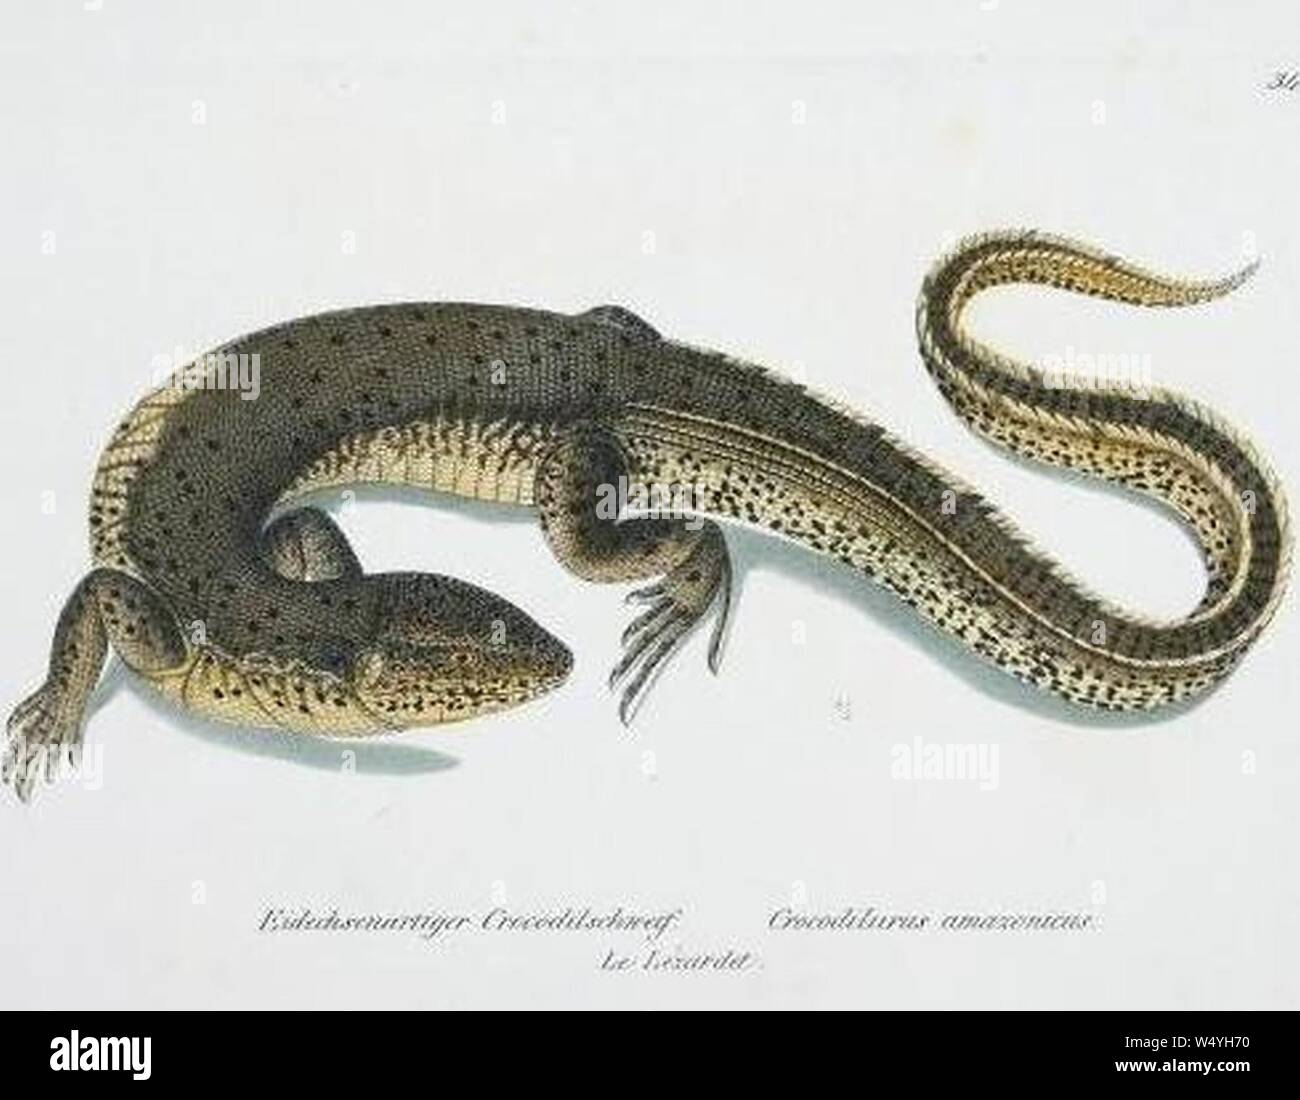 Crocodilurus amazonicus. Stock Photo